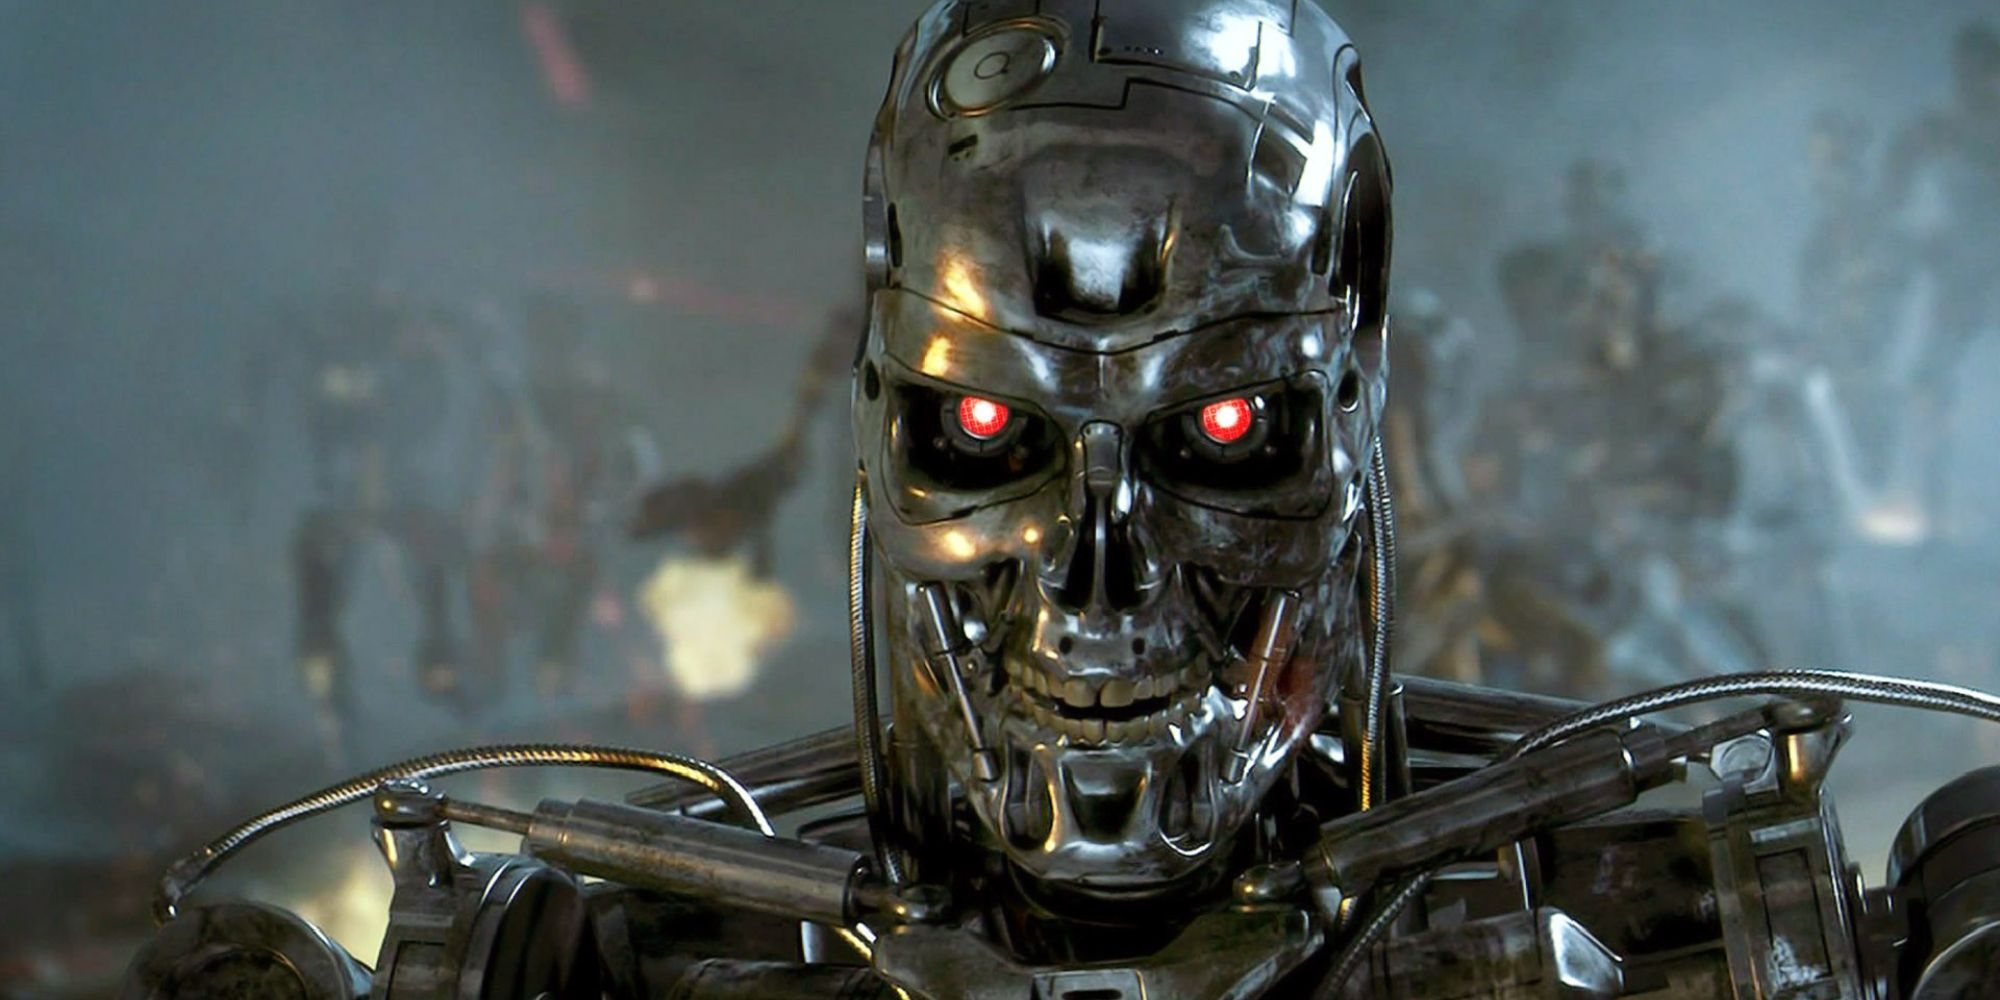 The cyborg in The Terminator